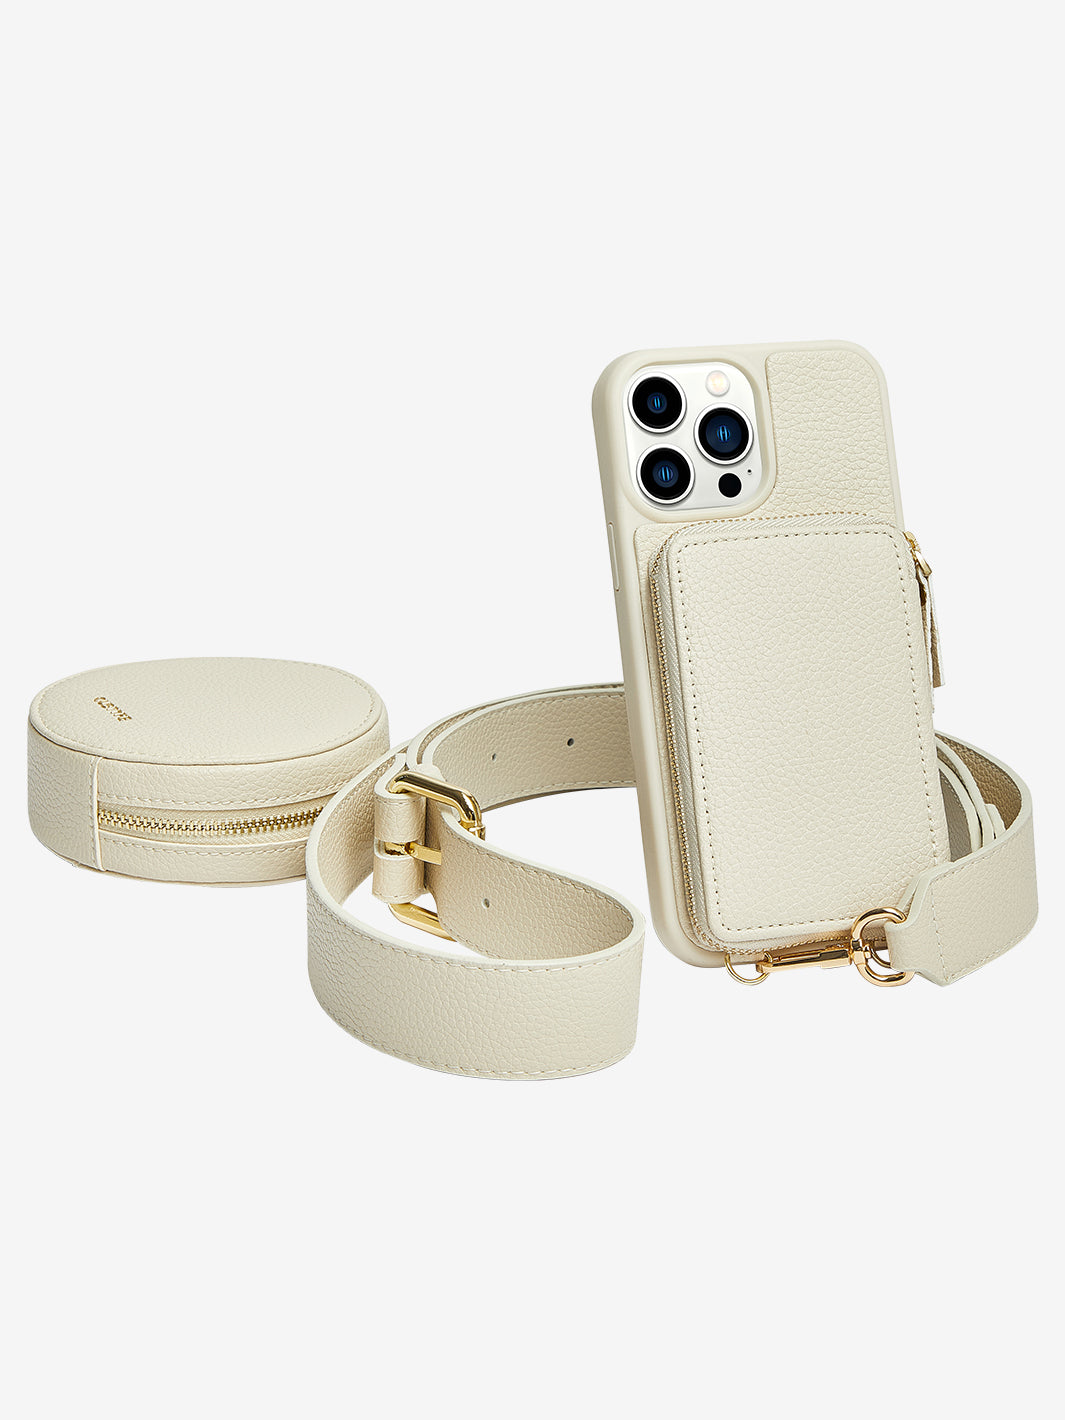 Custype crossbody iPhone case with Round bag beige-05